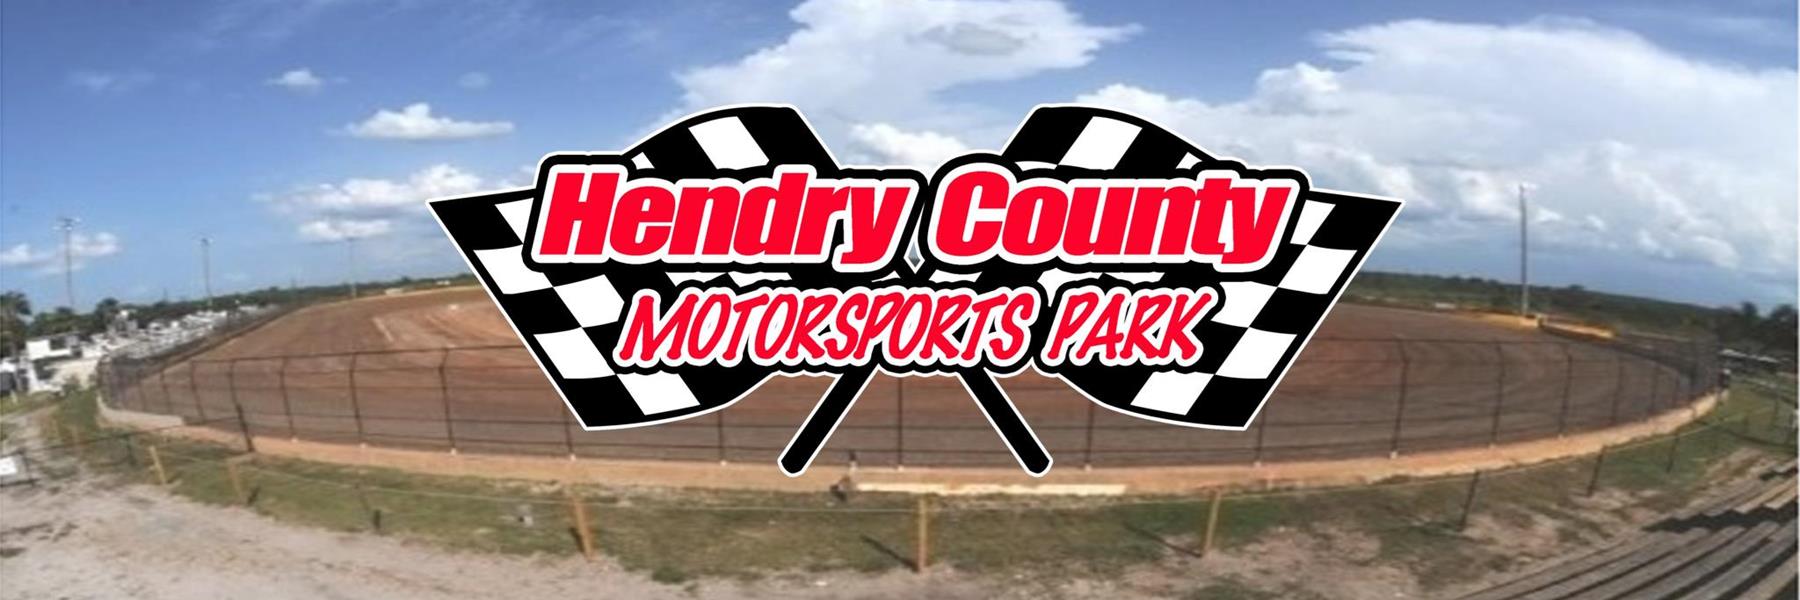 2/4/2023 - Hendry County Motorsports Park